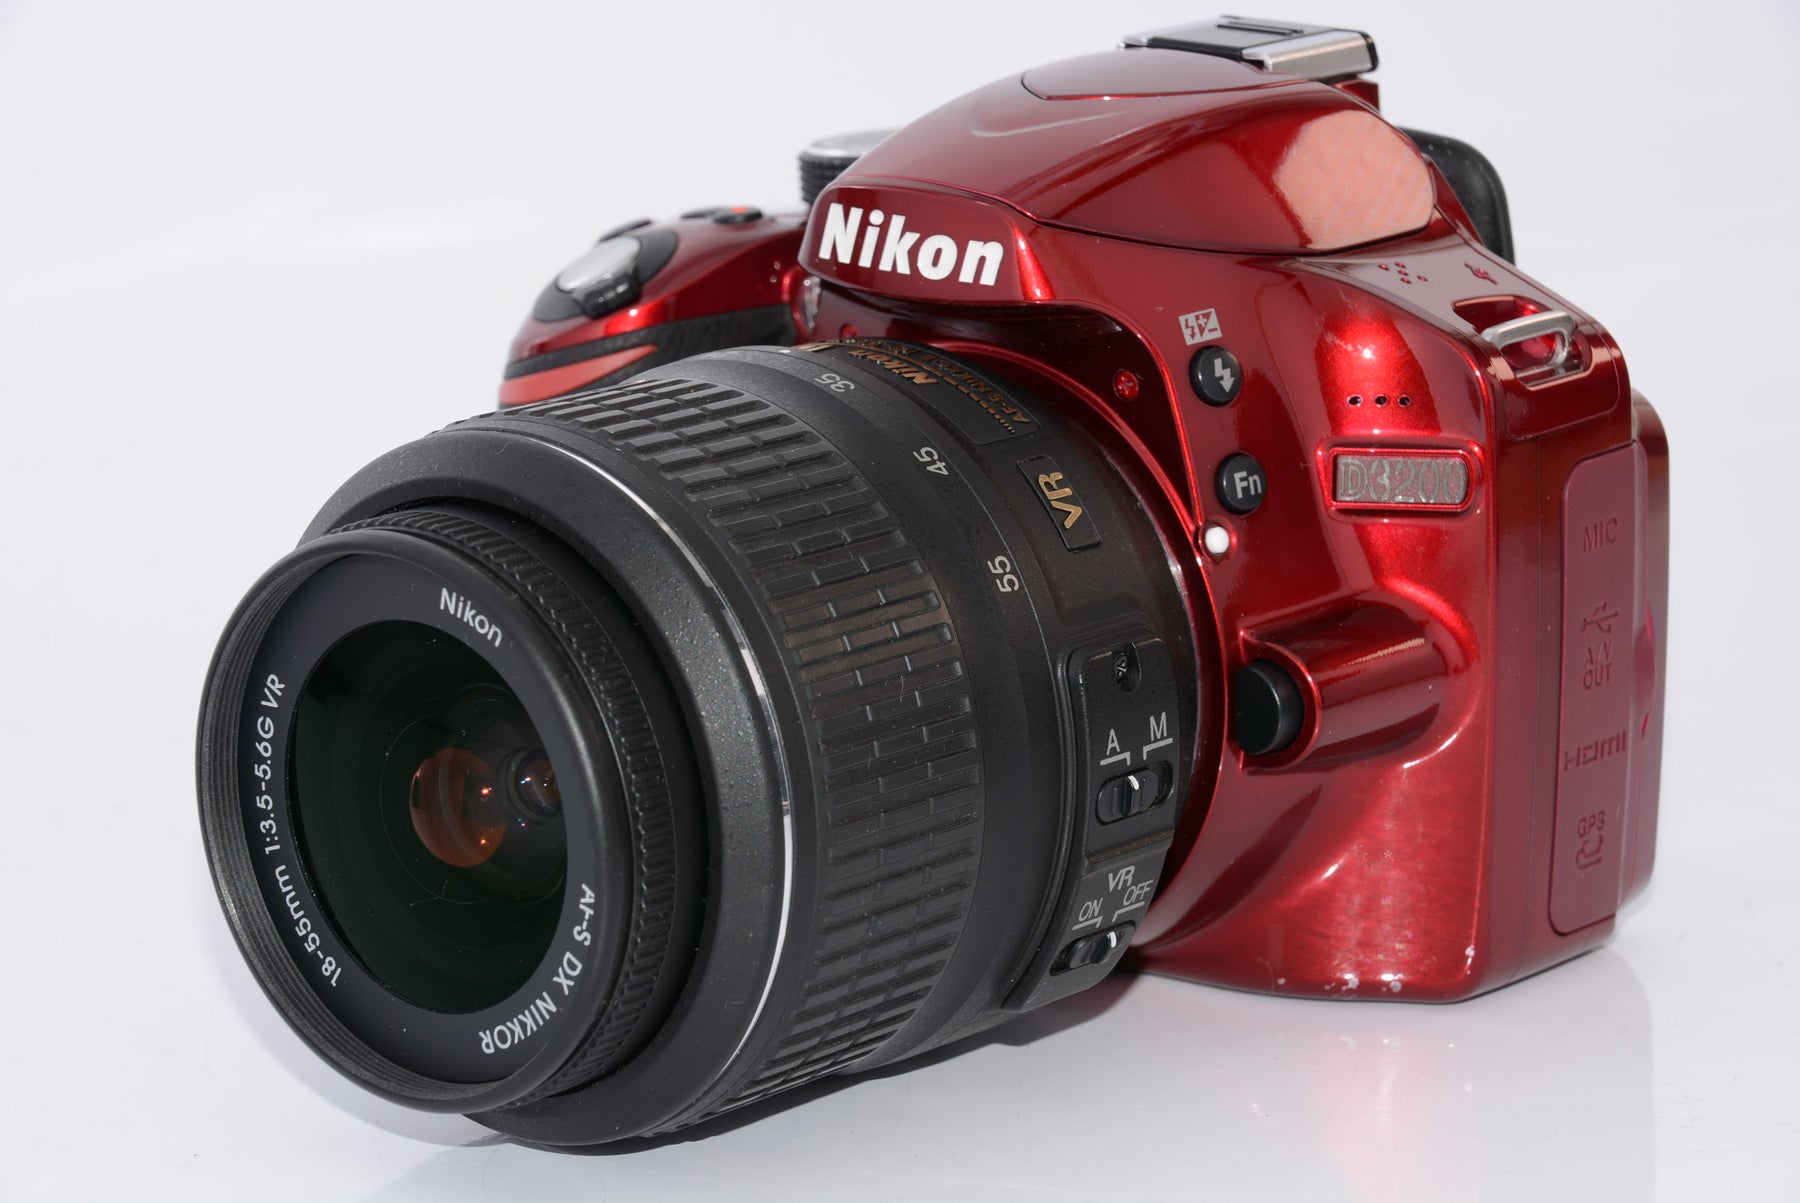 Nikon デジタル一眼レフカメラ D3200有タッチパネル機能